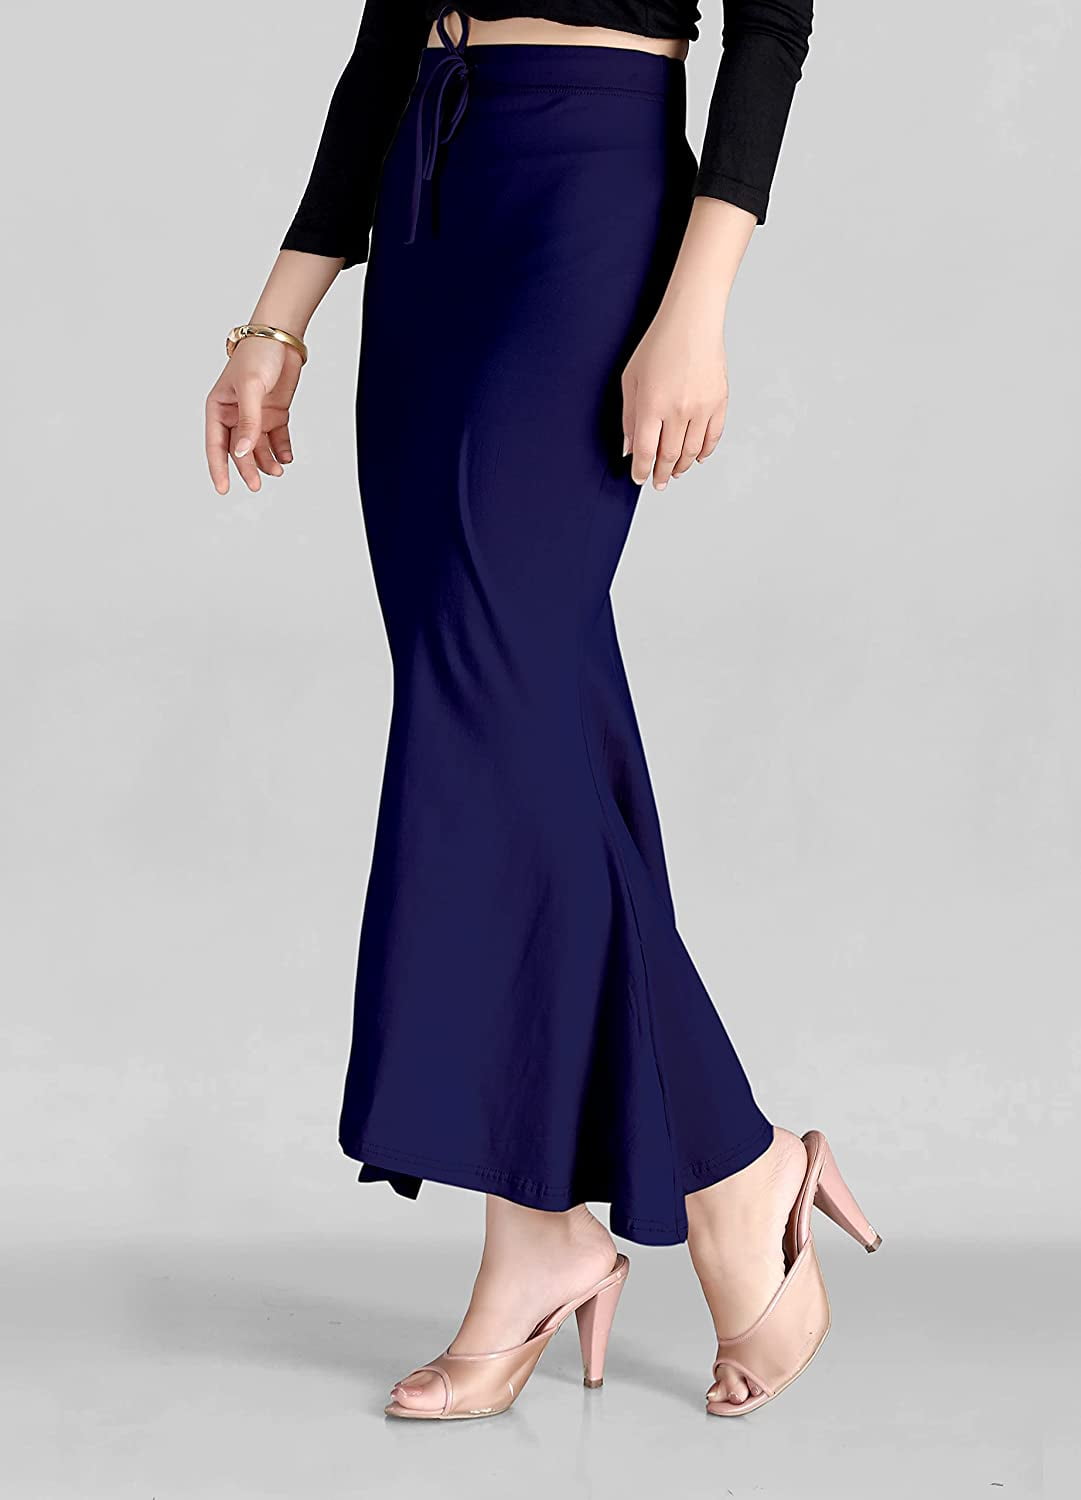 eloria Maroon Cotton Blended Shape Wear for Saree Petticoat Skirts for  Women Flare Saree Shapewear